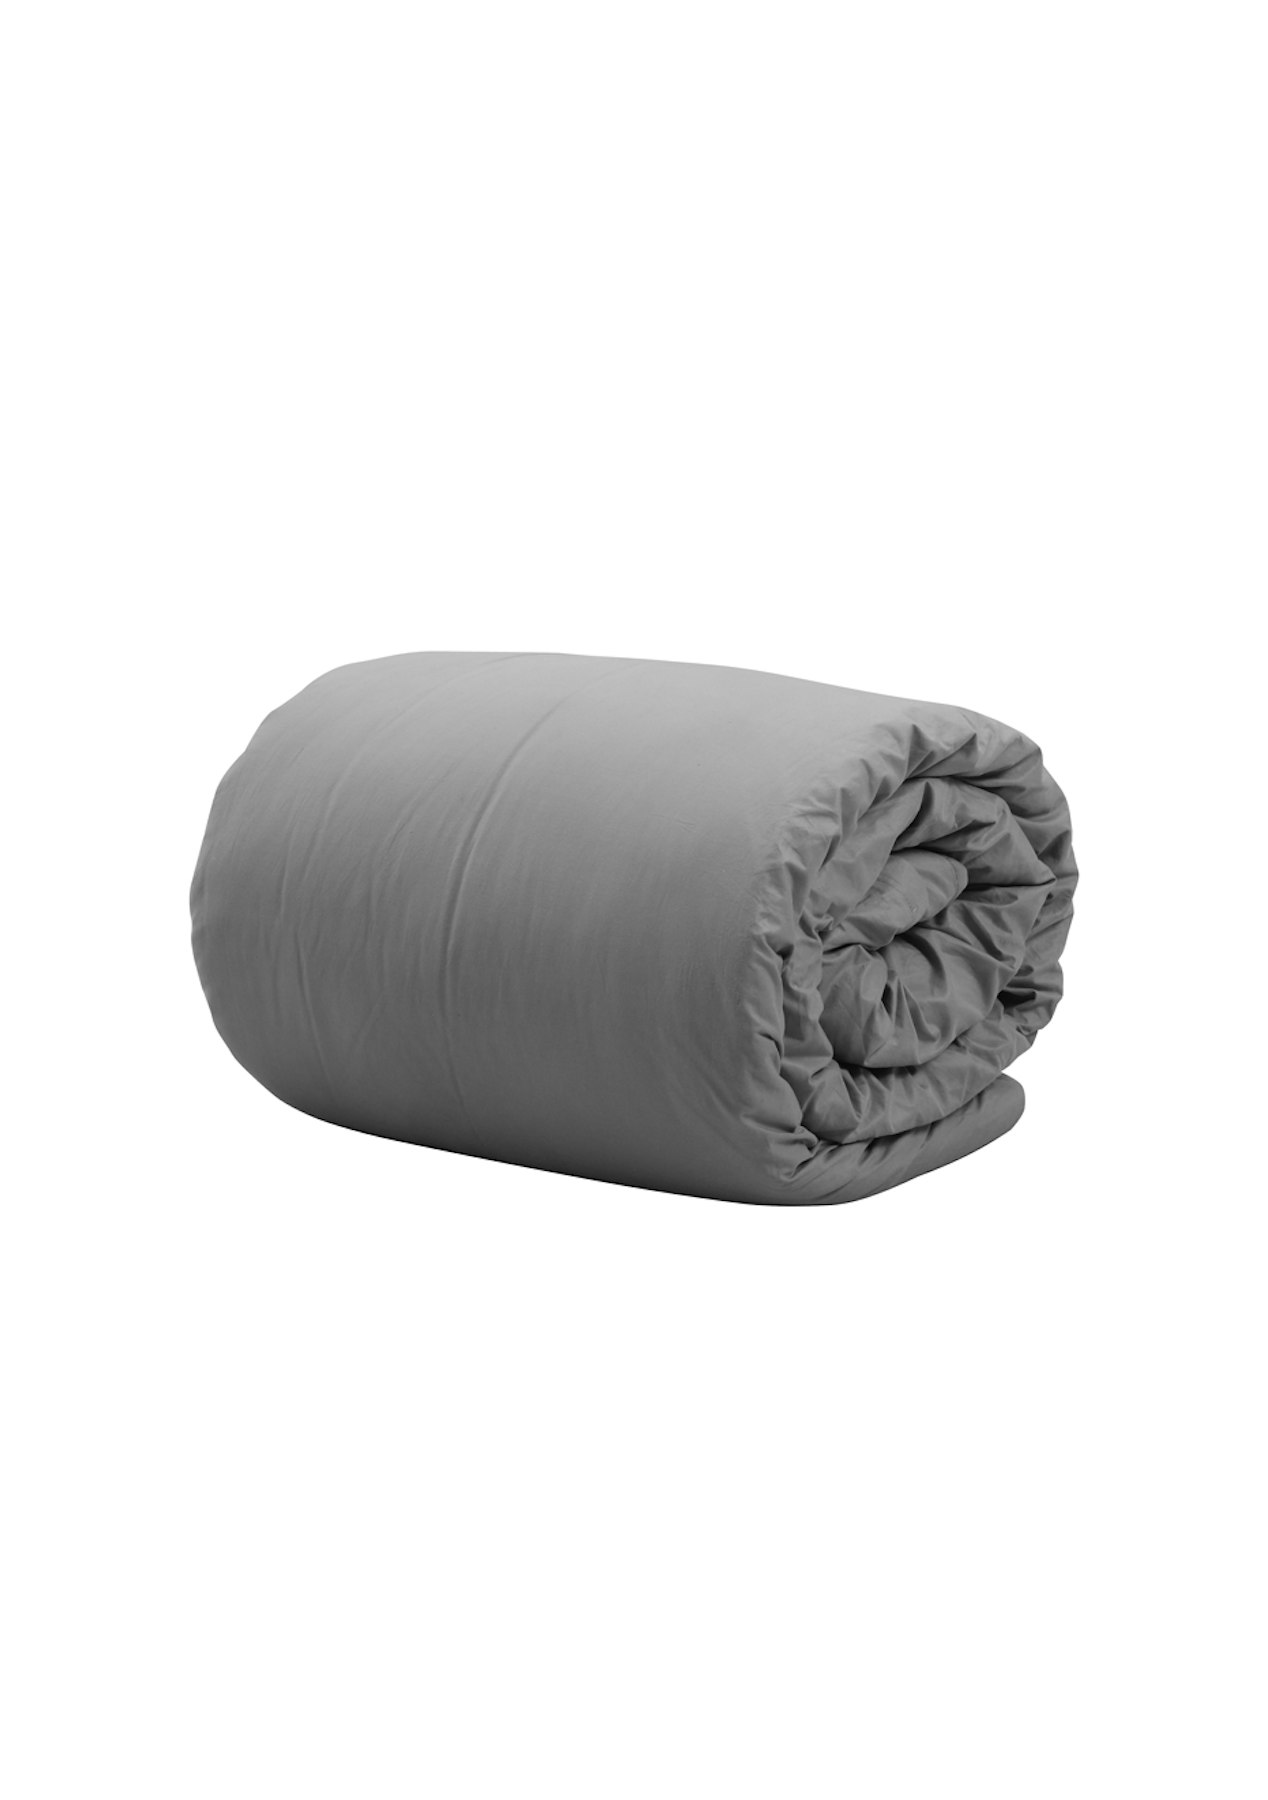 Weighted Calming Blanket 9KG Queen Bed - Grey - Weighted Calming